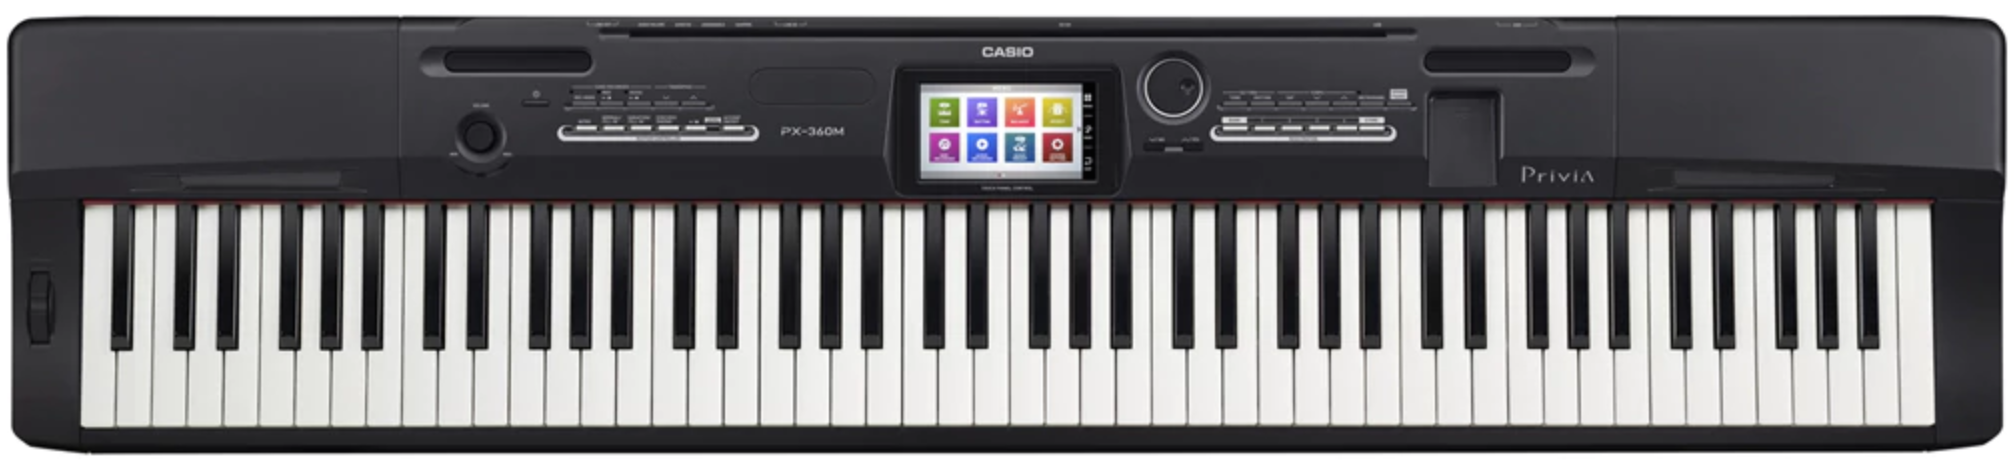 Casio Privia PX-360 Digital Piano and Workstation